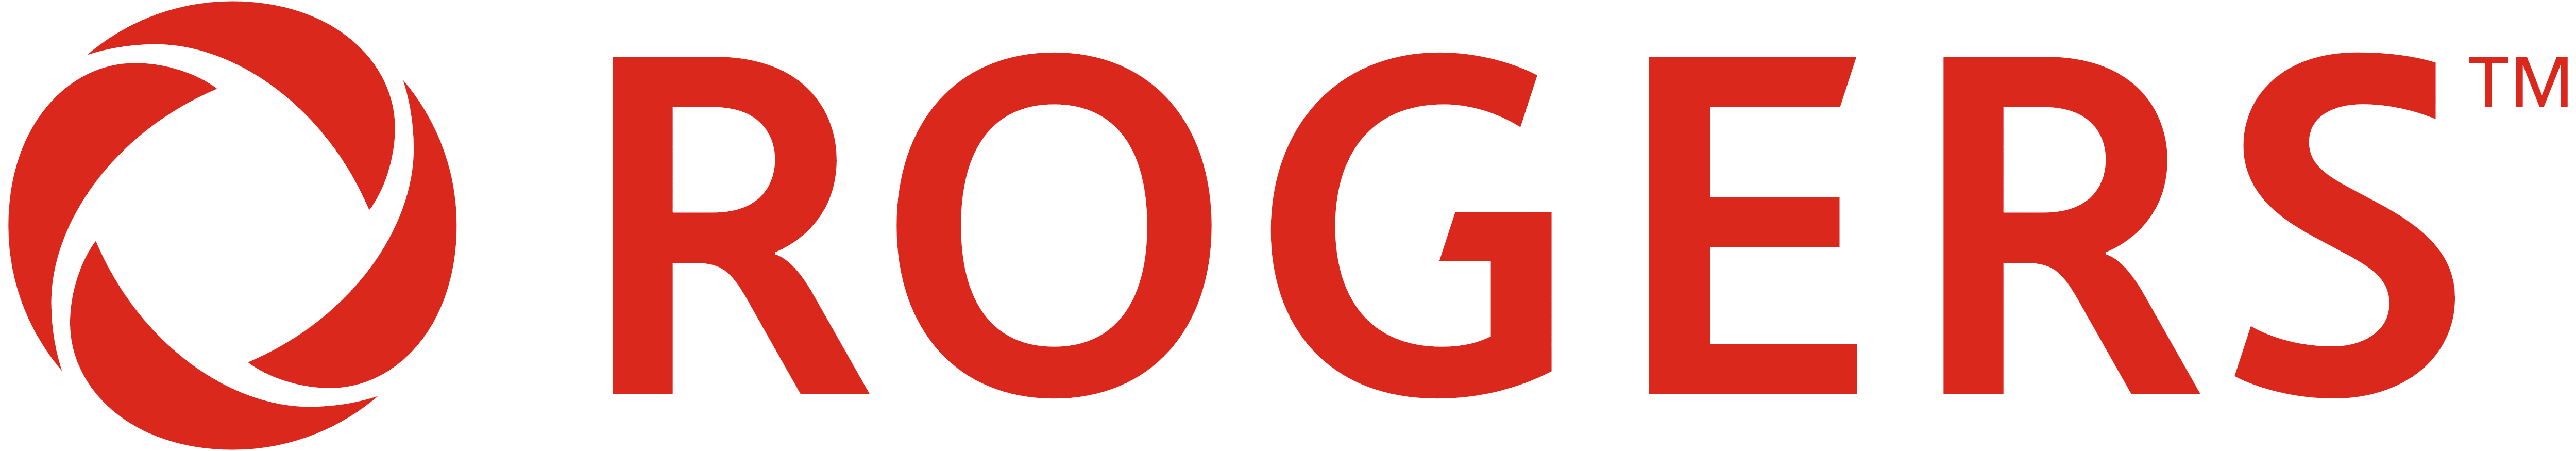 rogers-logo-steverogers